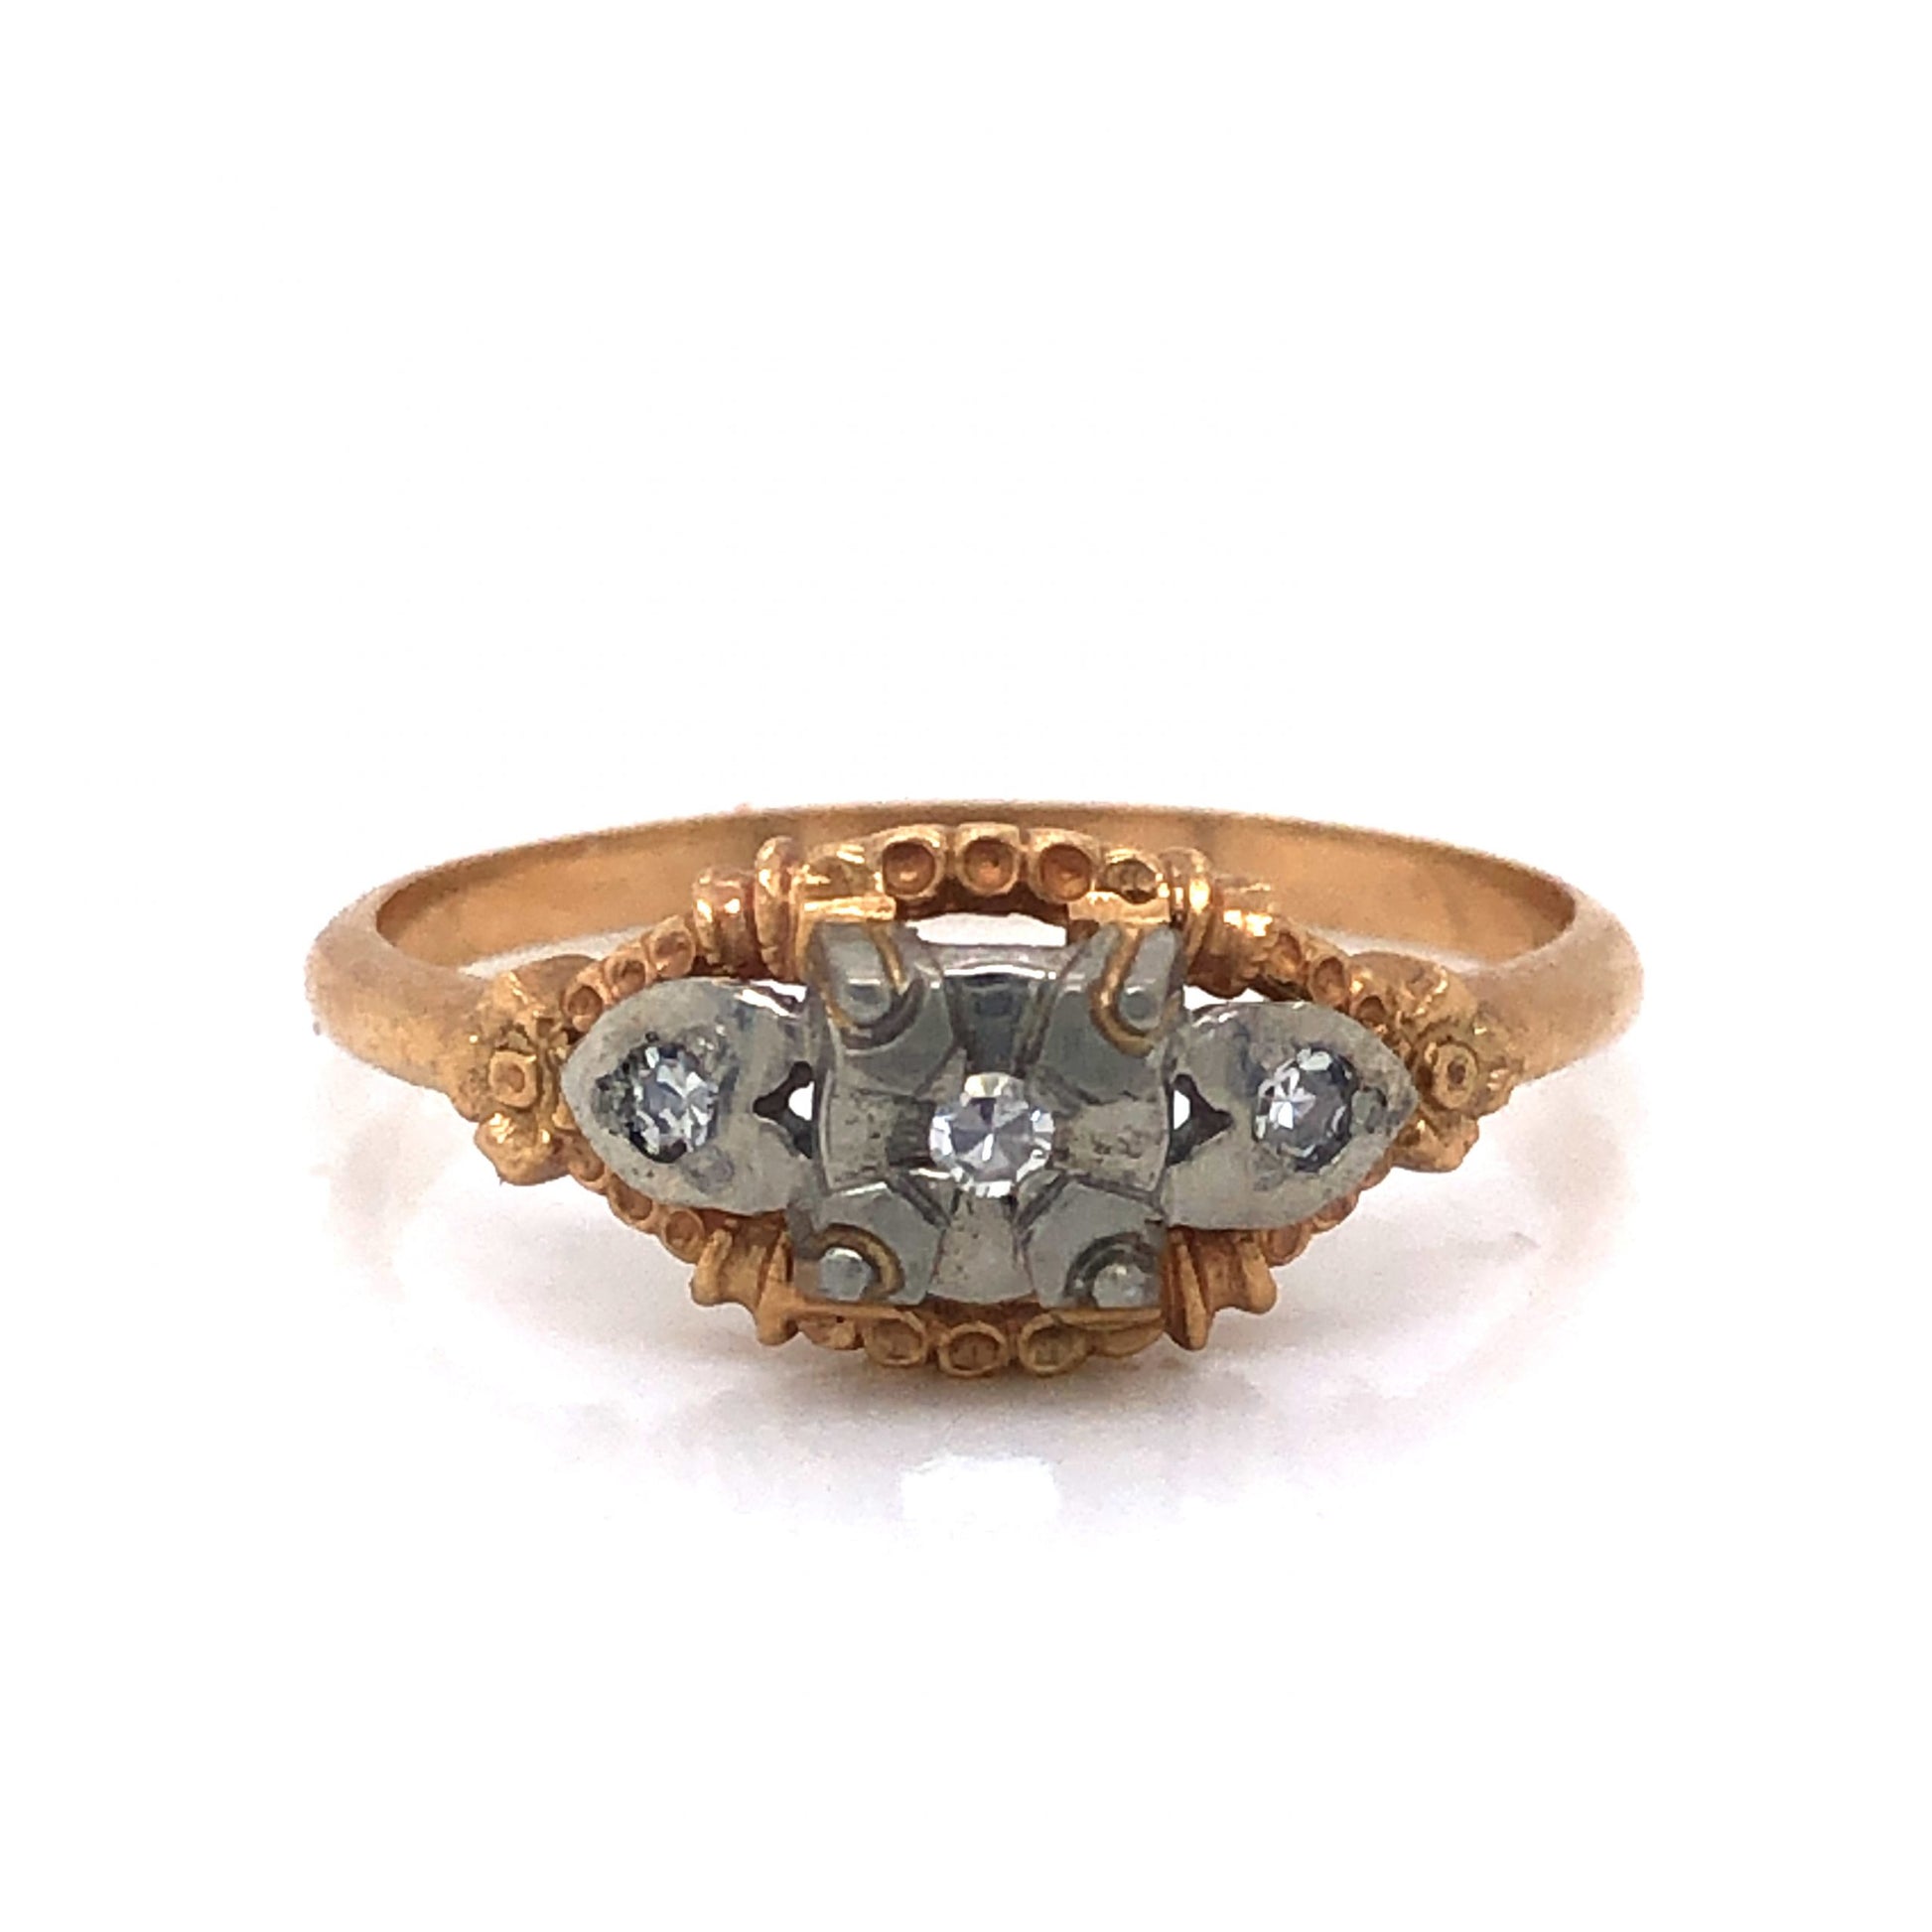 Petite Three Stone Diamond Engagement Ring in 14k & 18k GoldComposition: 14 Karat Yellow Gold/18 Karat White Gold Ring Size: 6.25 Total Diamond Weight: .045ct Total Gram Weight: 1.9 g Inscription: 14-18k
      